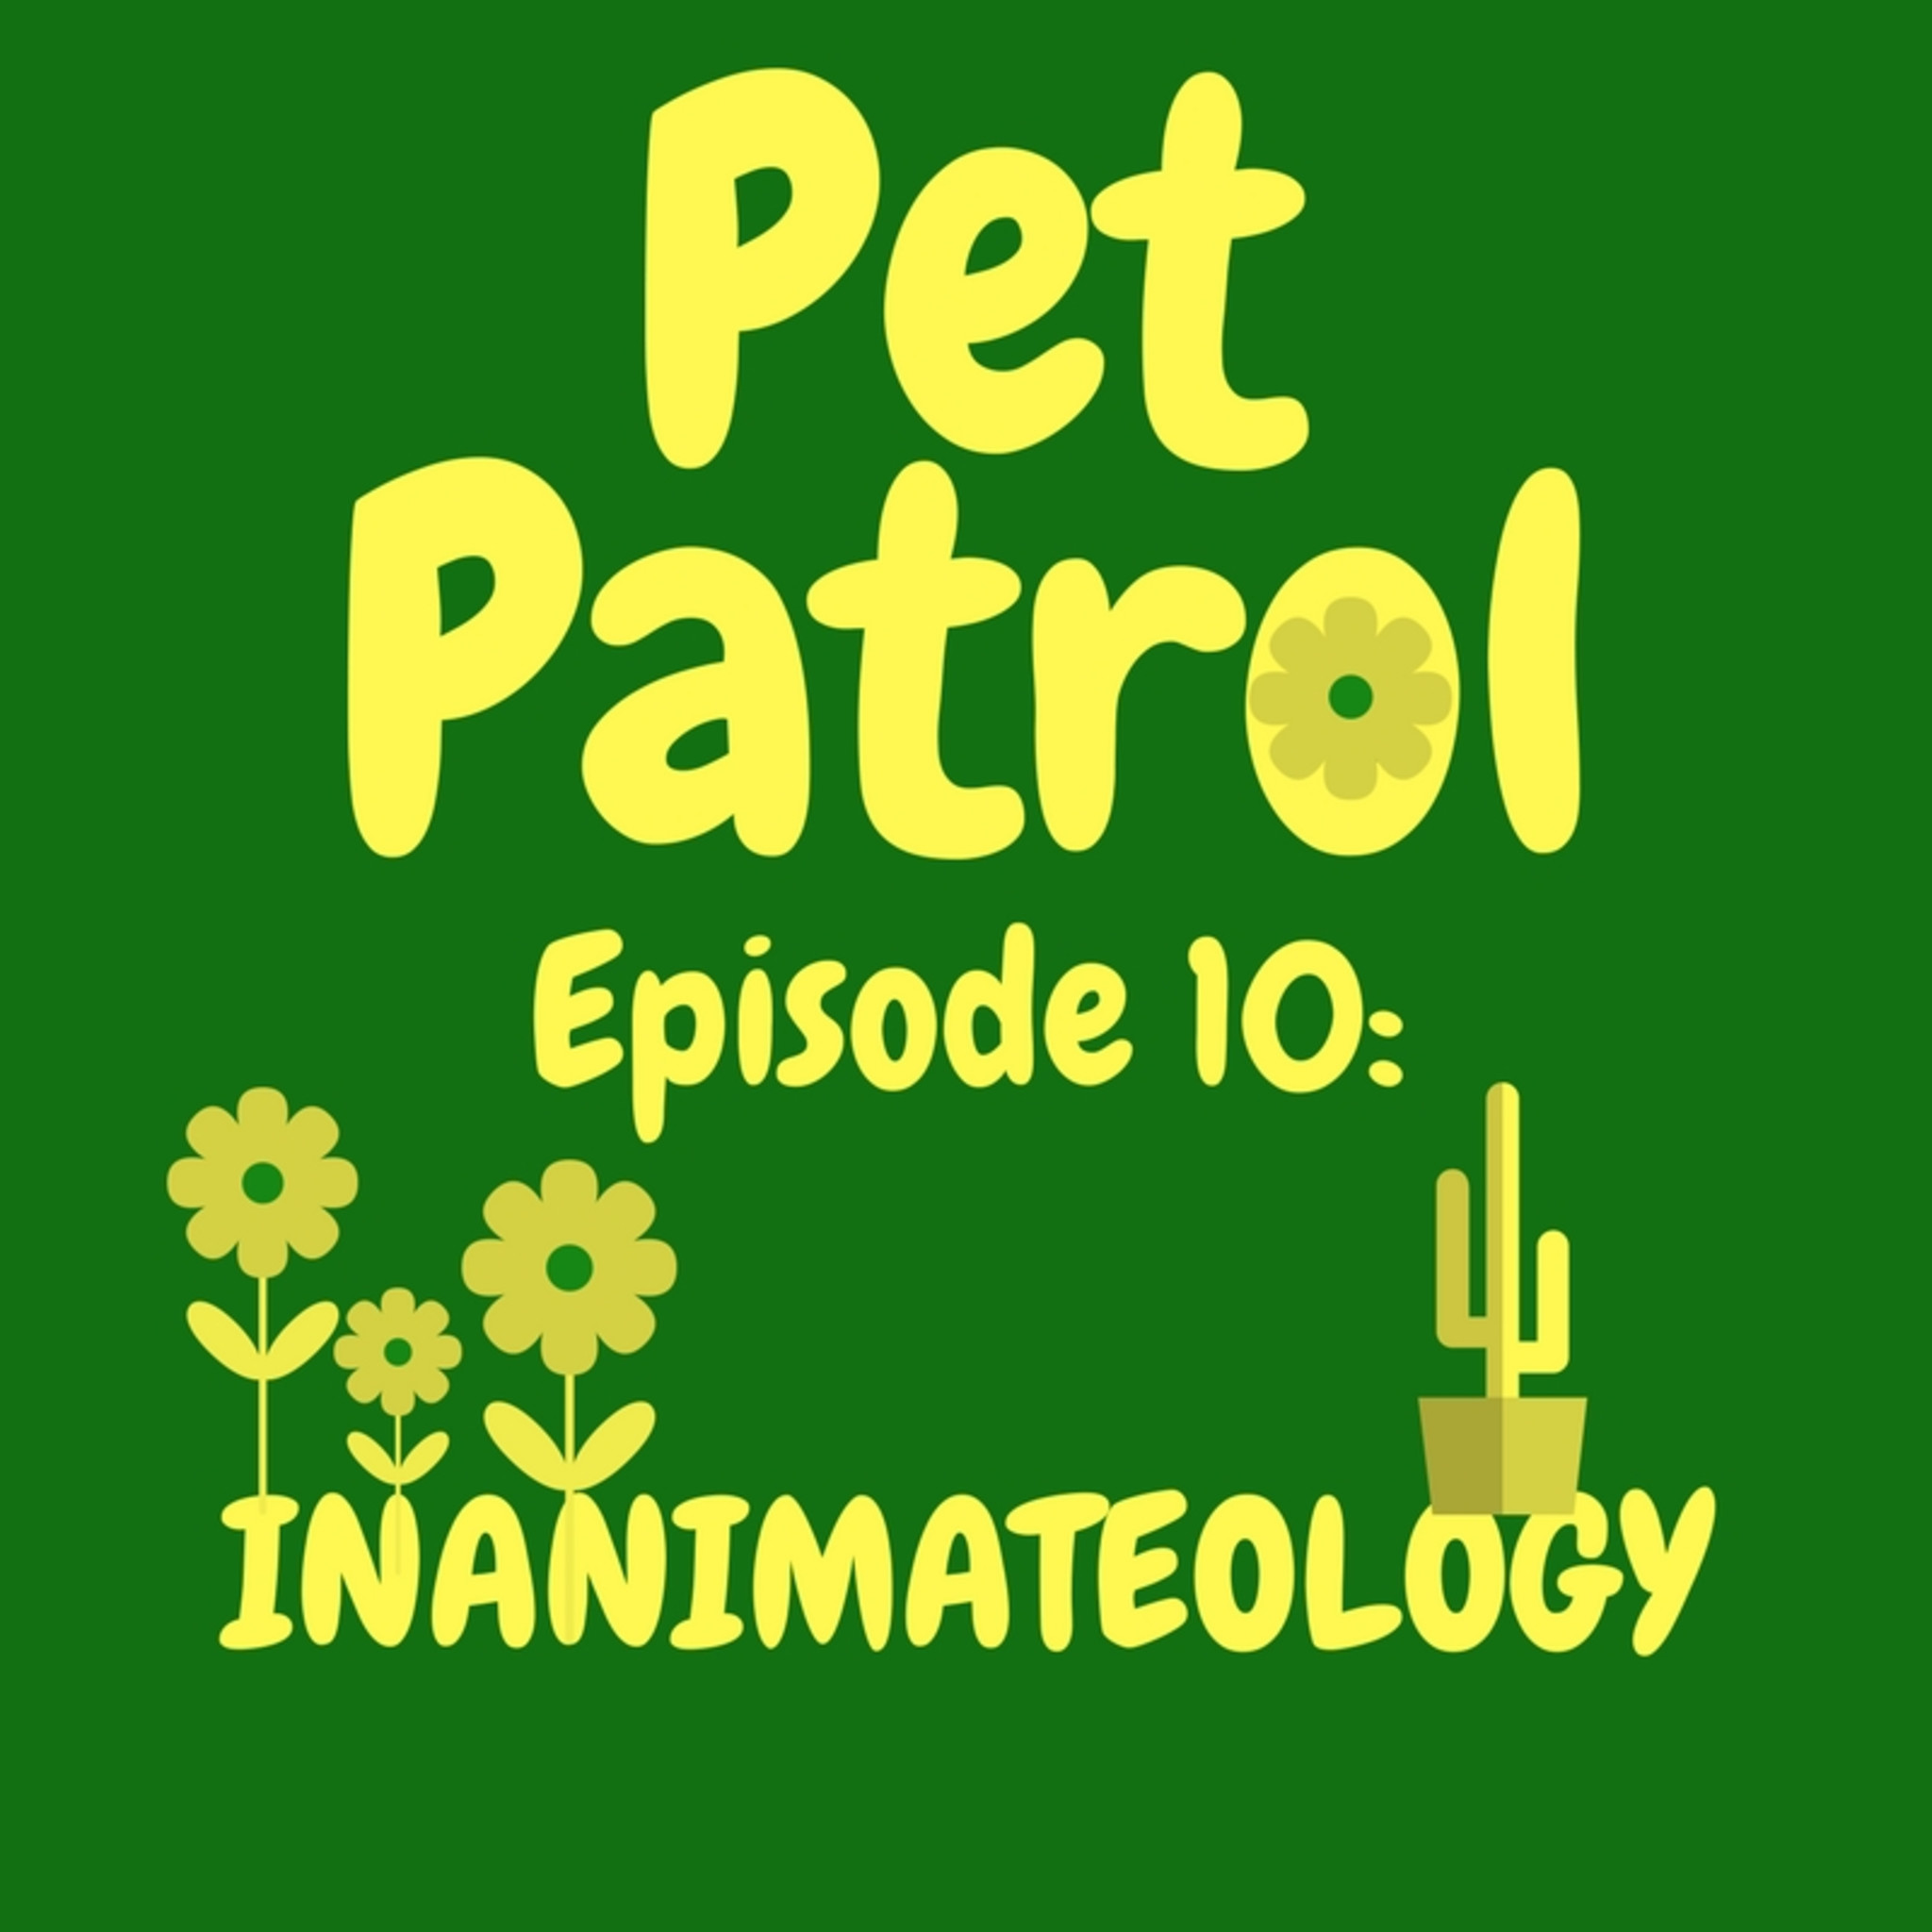 Inanimateology - Plant stories